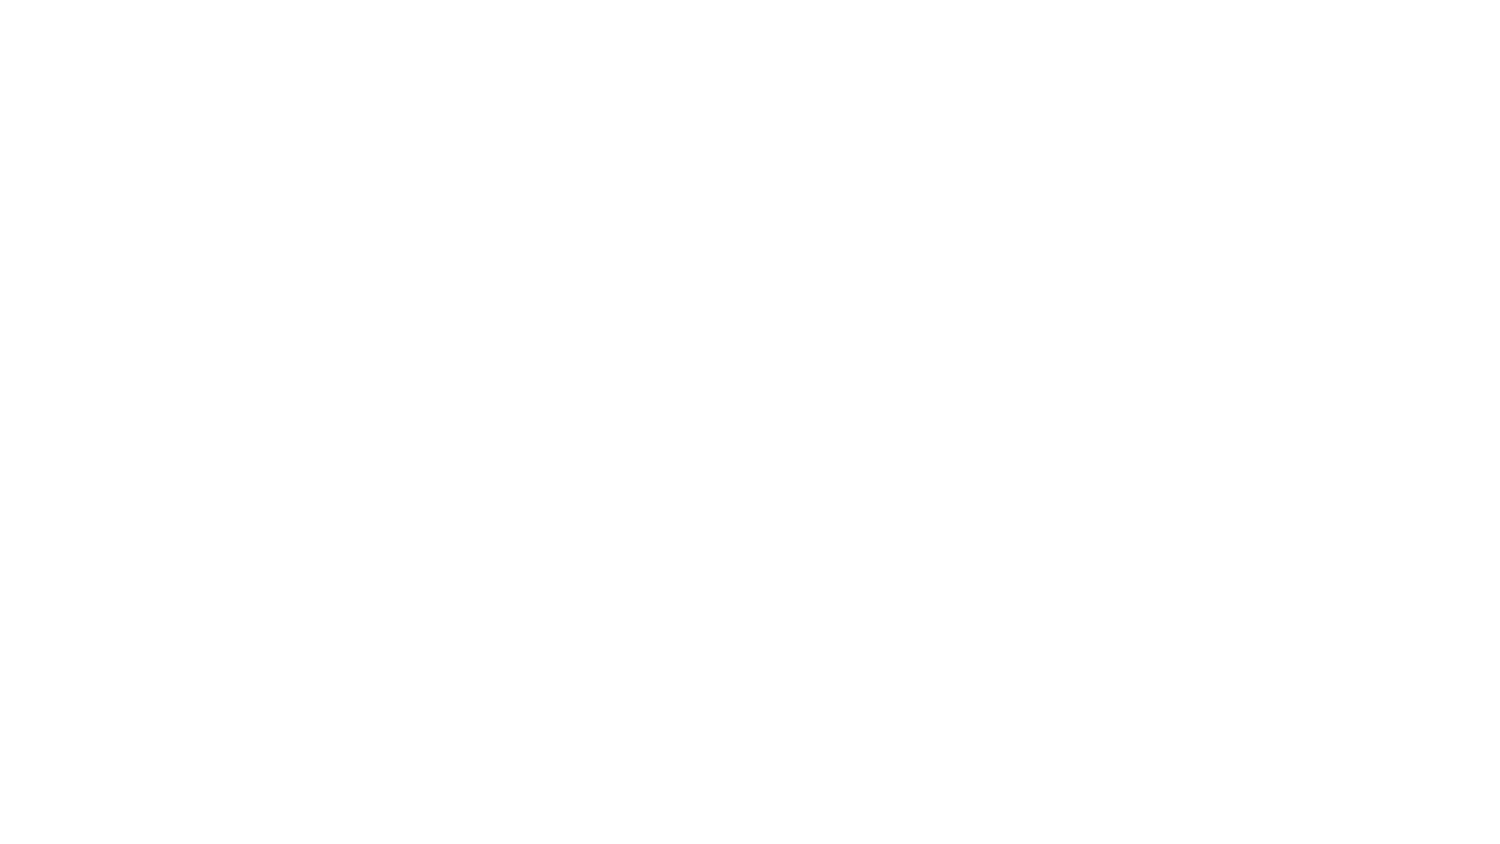 The Cottage, Community Bakery